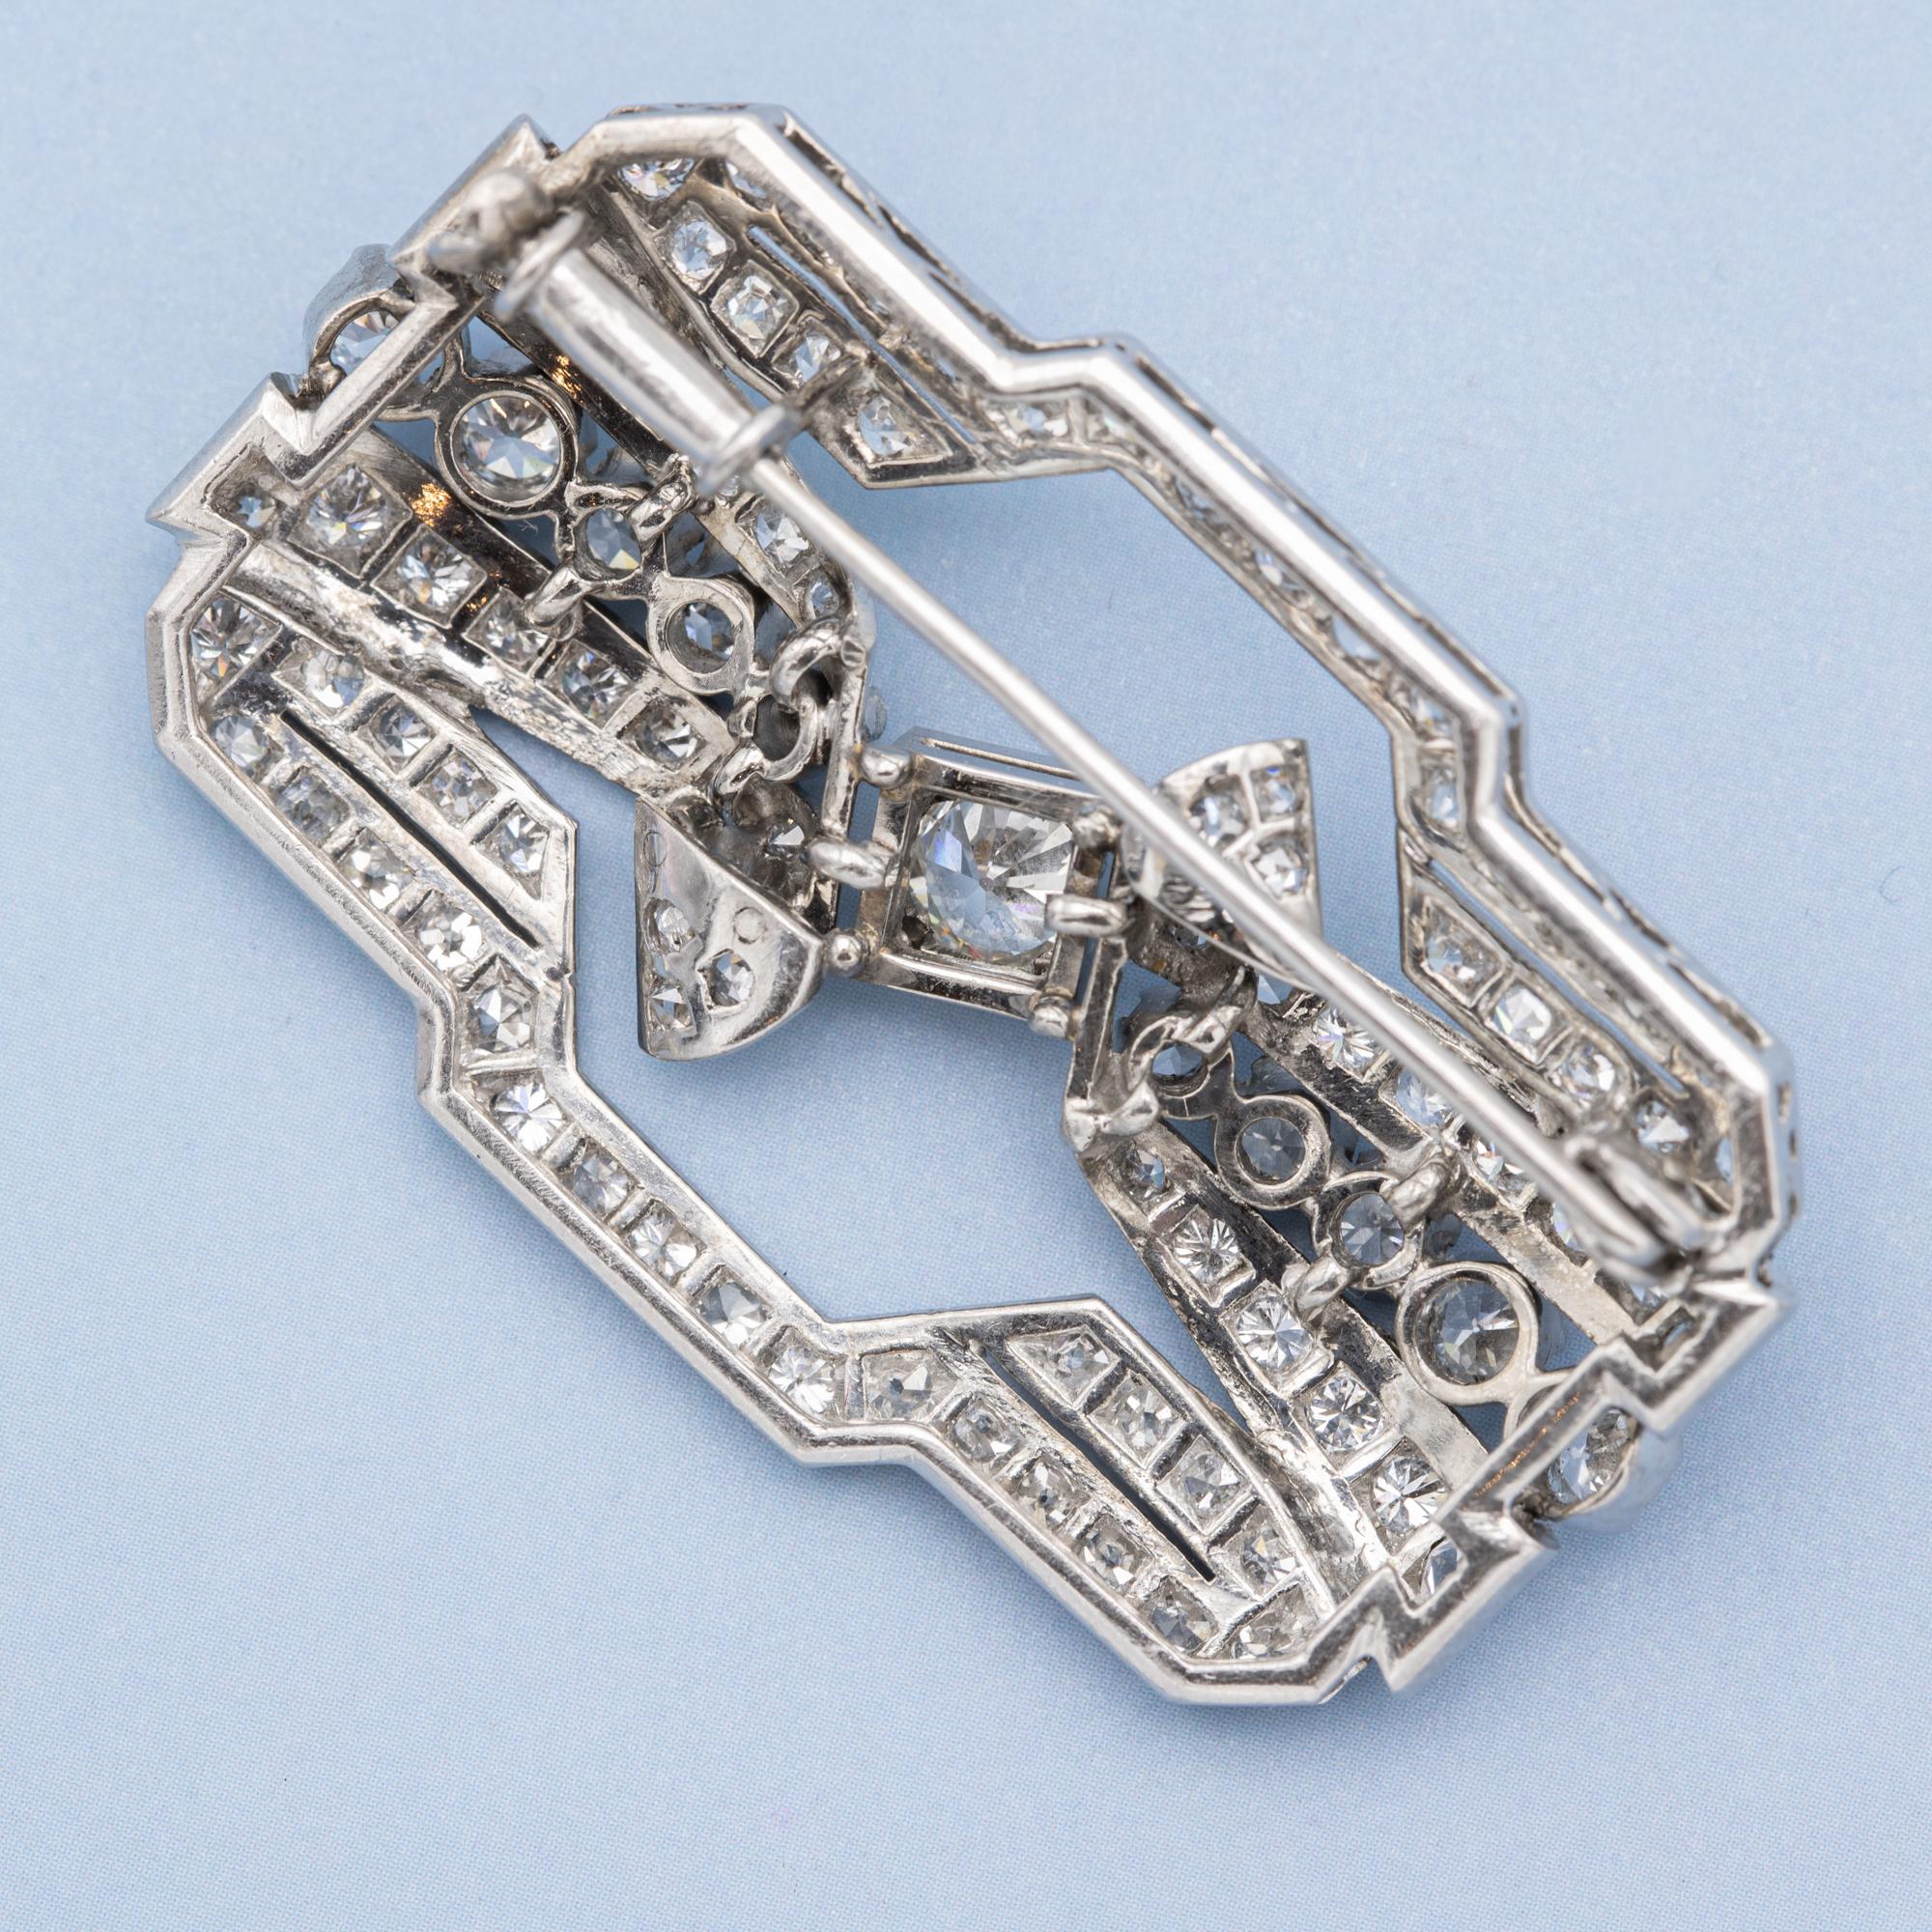 Art Deco brooch - 3.1 ct diamond - Old cut - Antique jewelry - Platinum 1930  For Sale 2